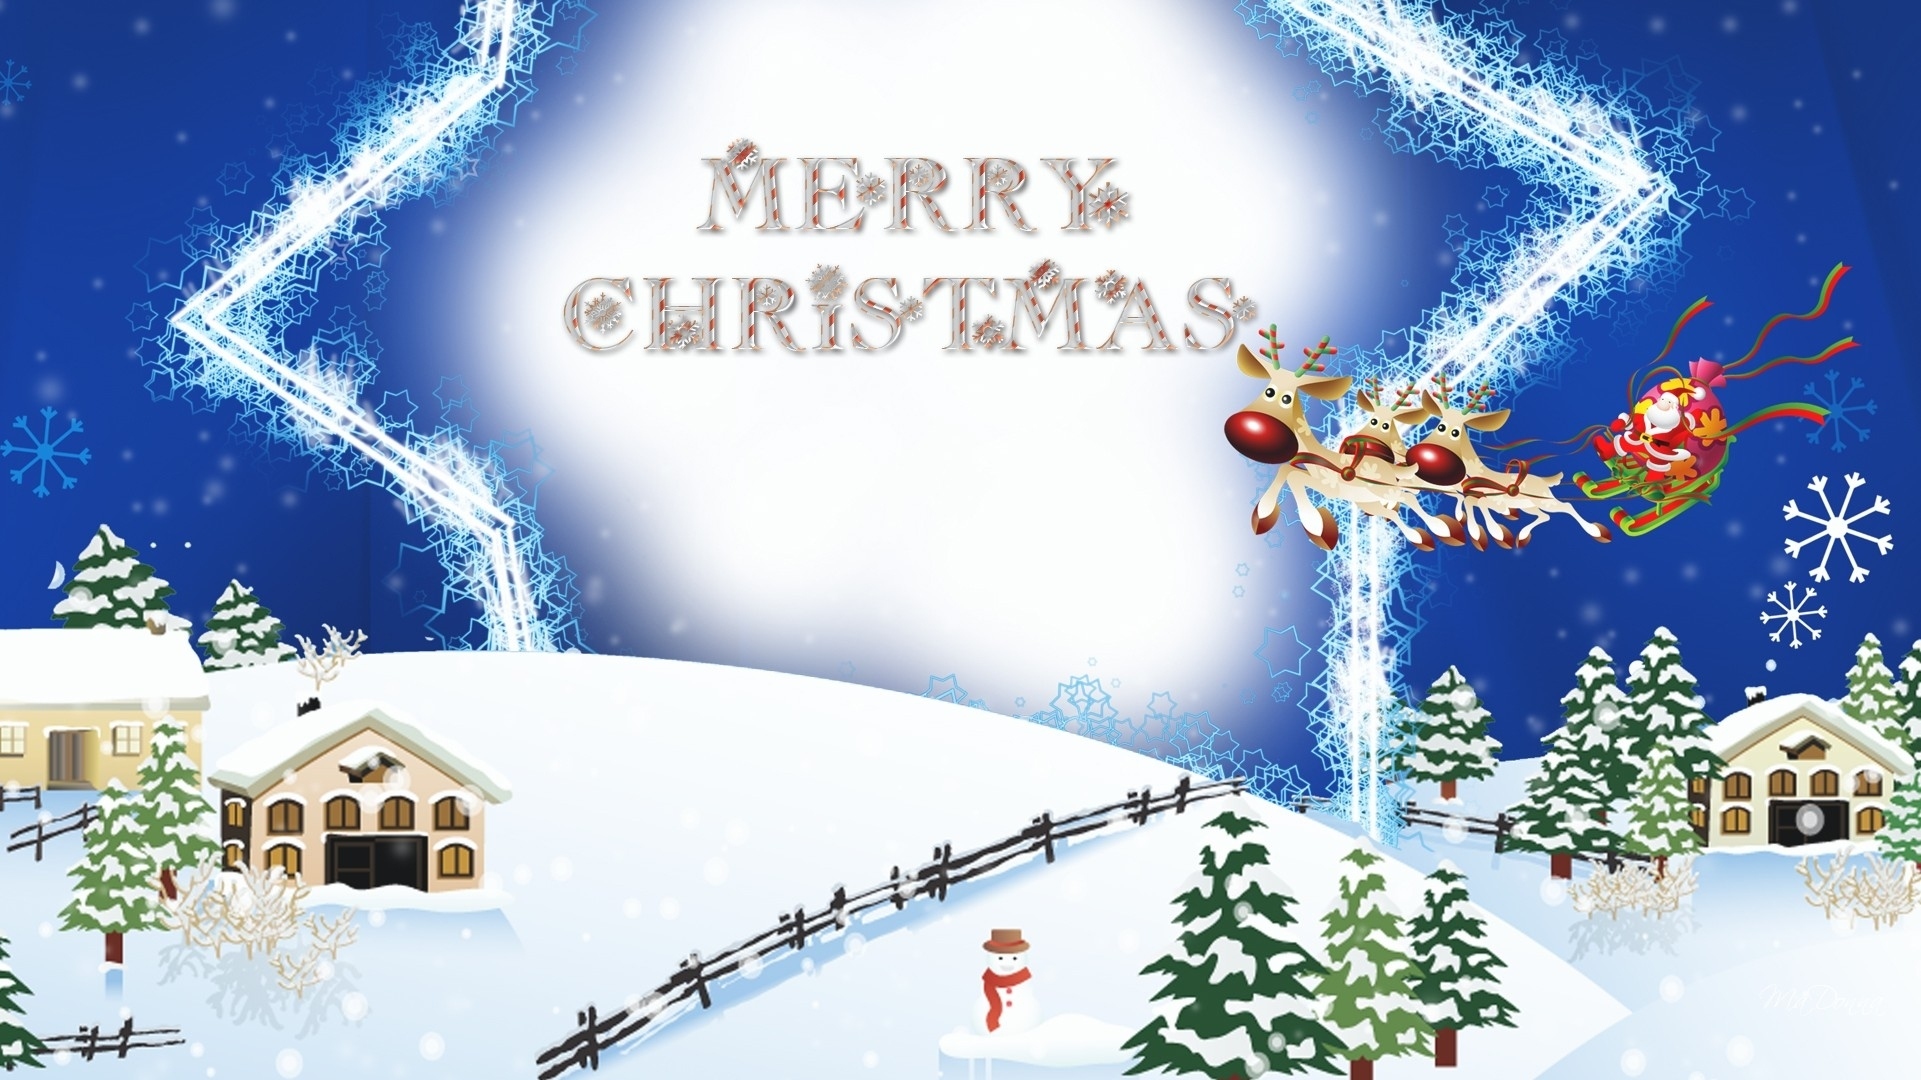 Windows Backgrounds holiday, christmas, house, merry christmas, reindeer, santa claus, sleigh, snow, snowman